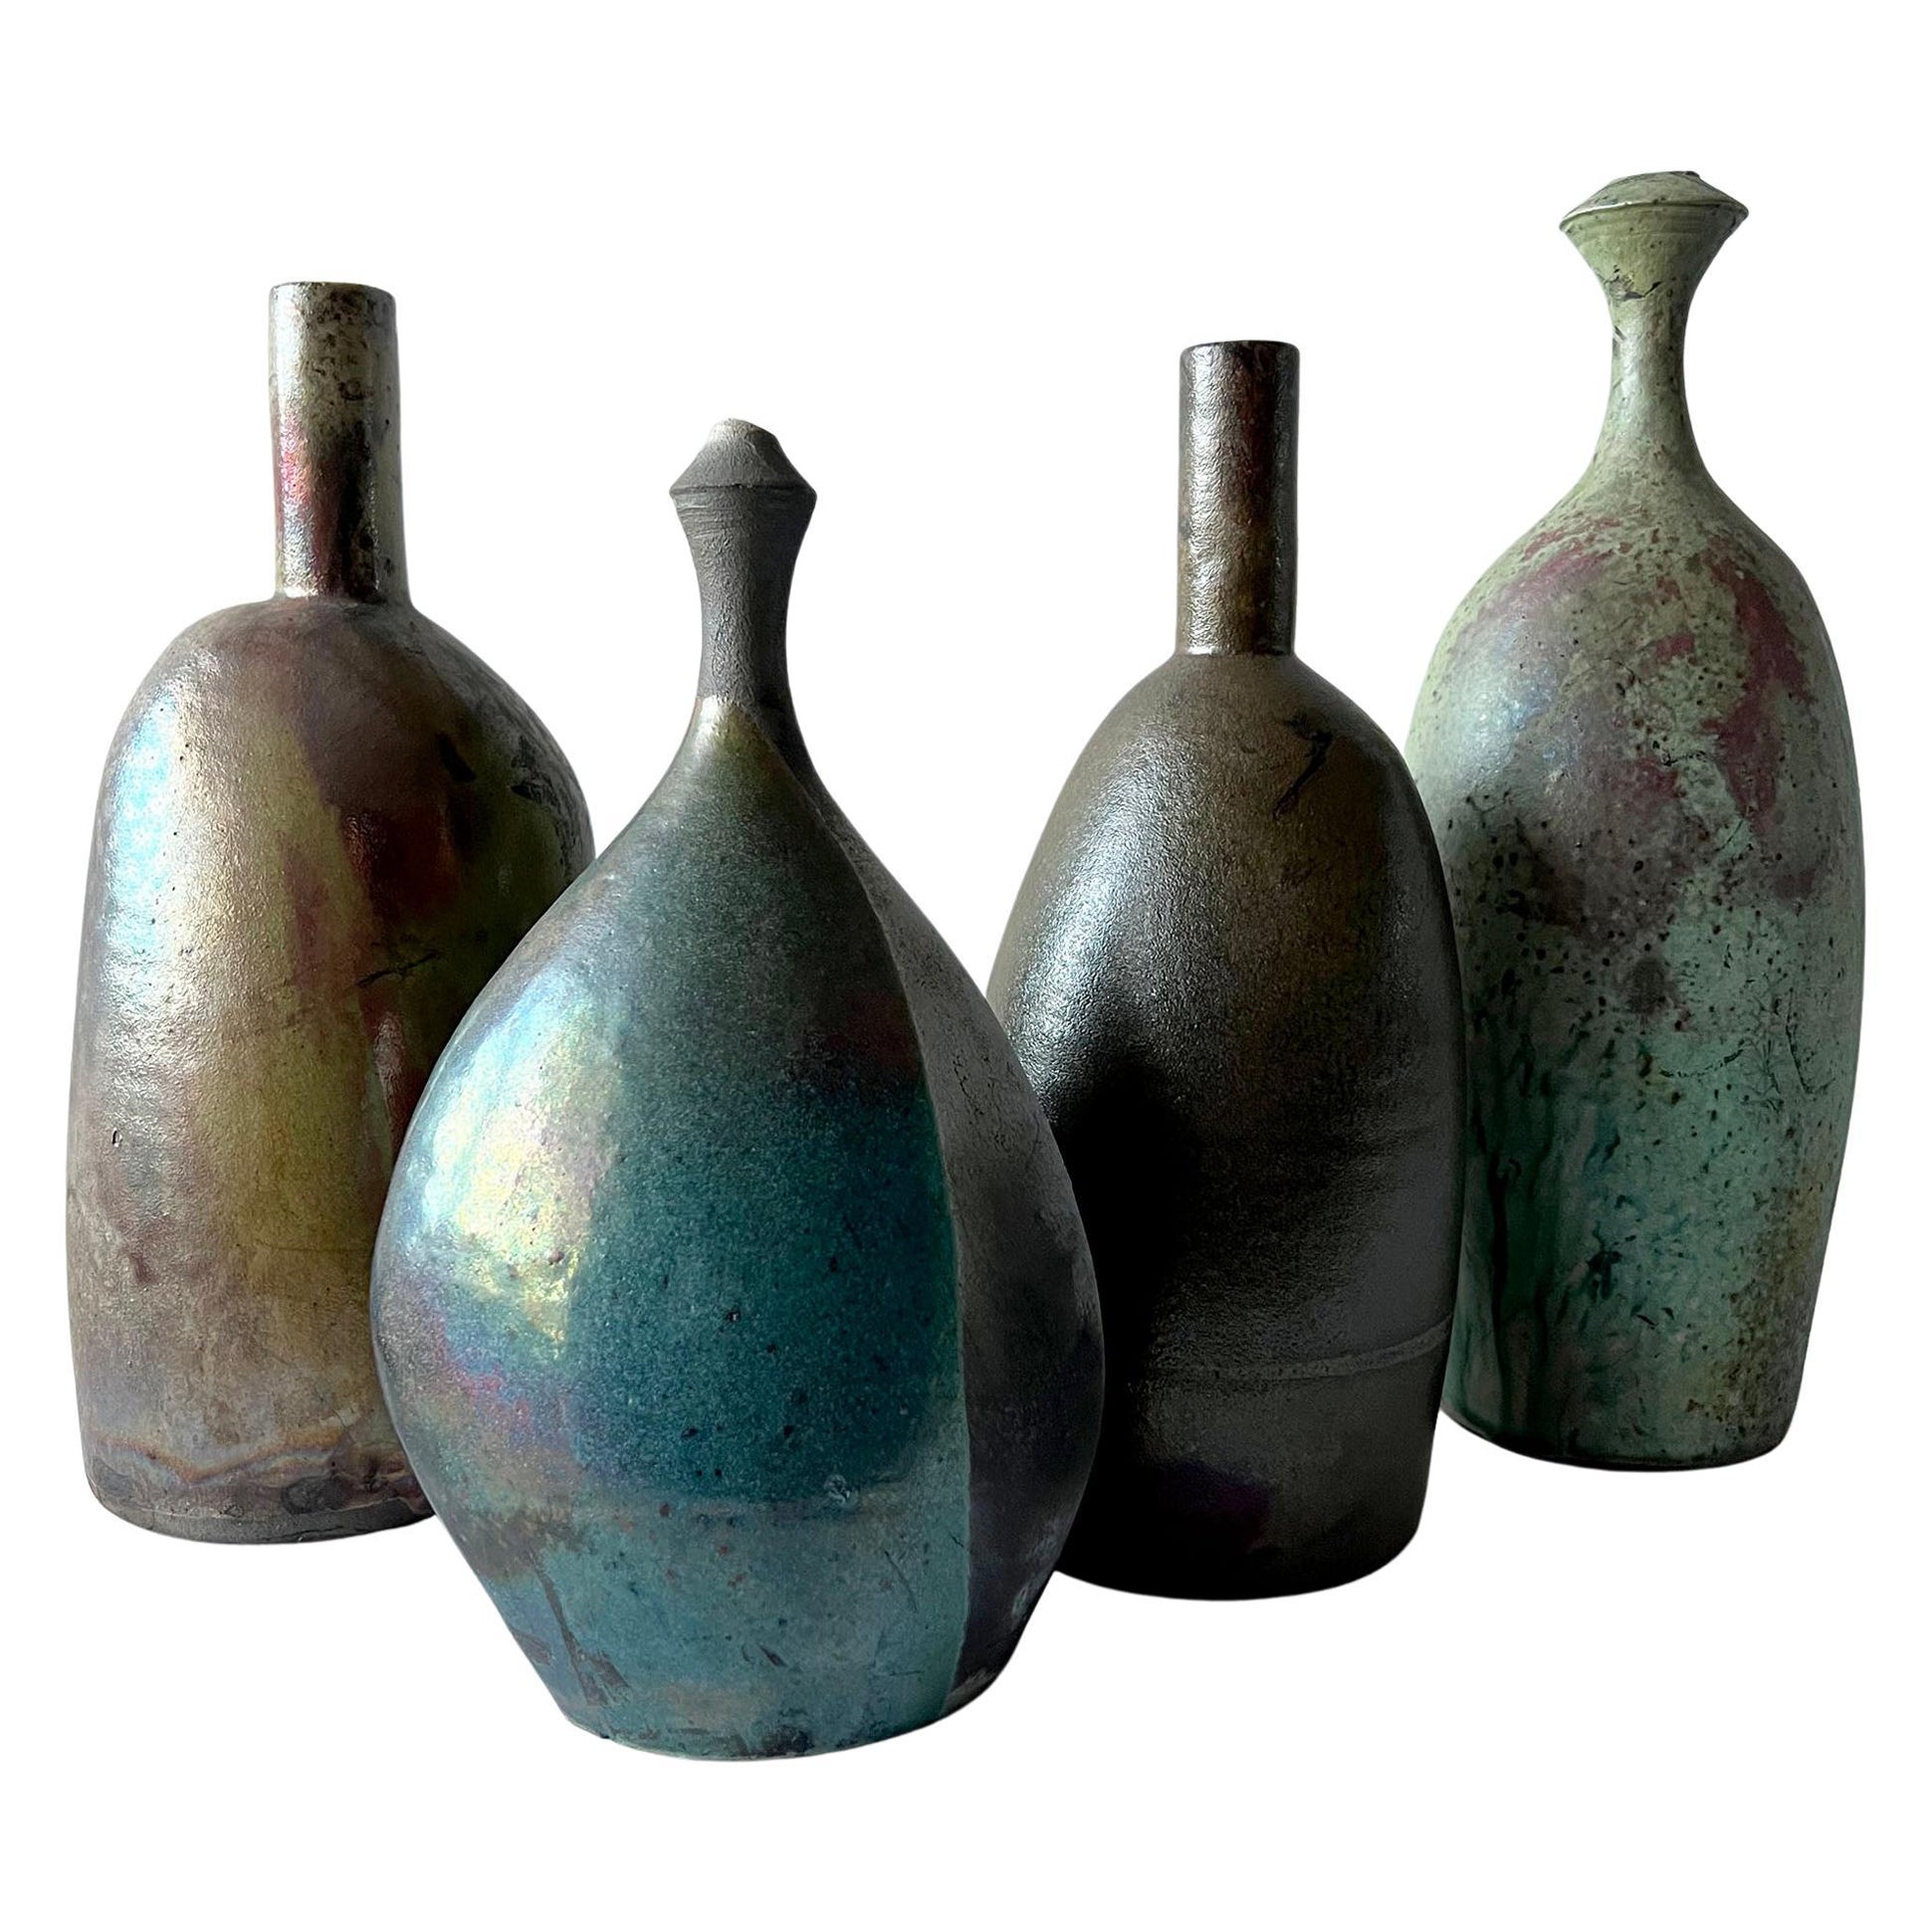 Tom Tomas Collins California Studio Stoneware Pottery Bottle Vase Collection